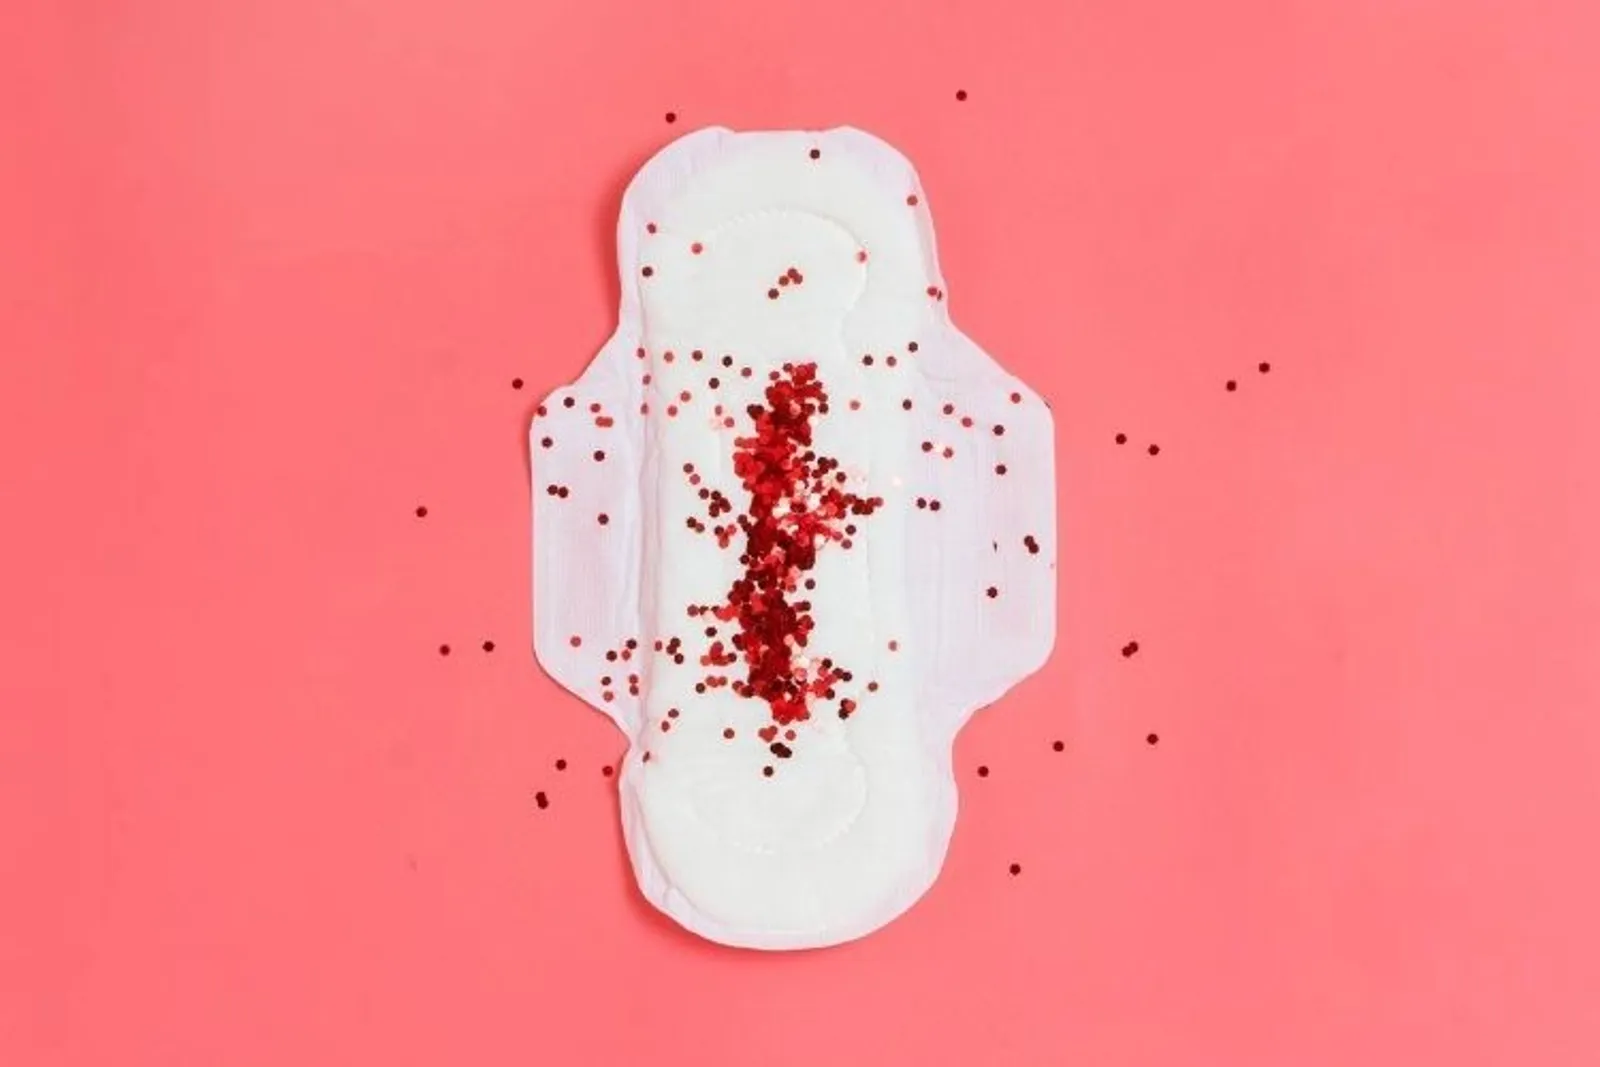 Jangan Anggap Sepele! Ini 7 Masalah Menstruasi yang Wajib Diperhatikan